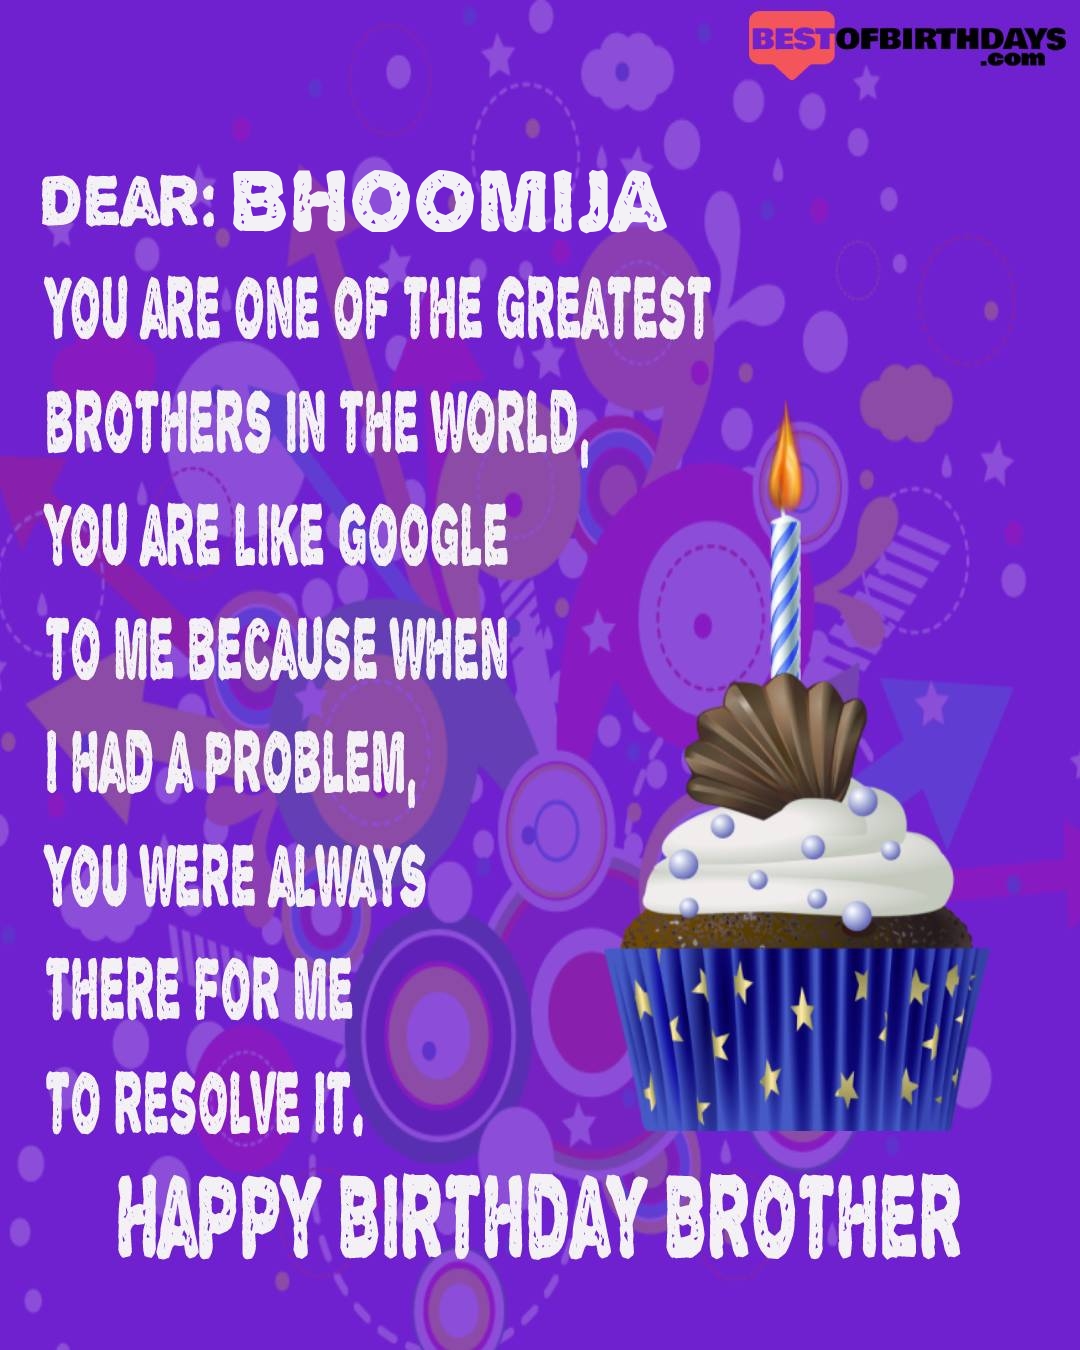 Happy birthday bhoomija bhai brother bro